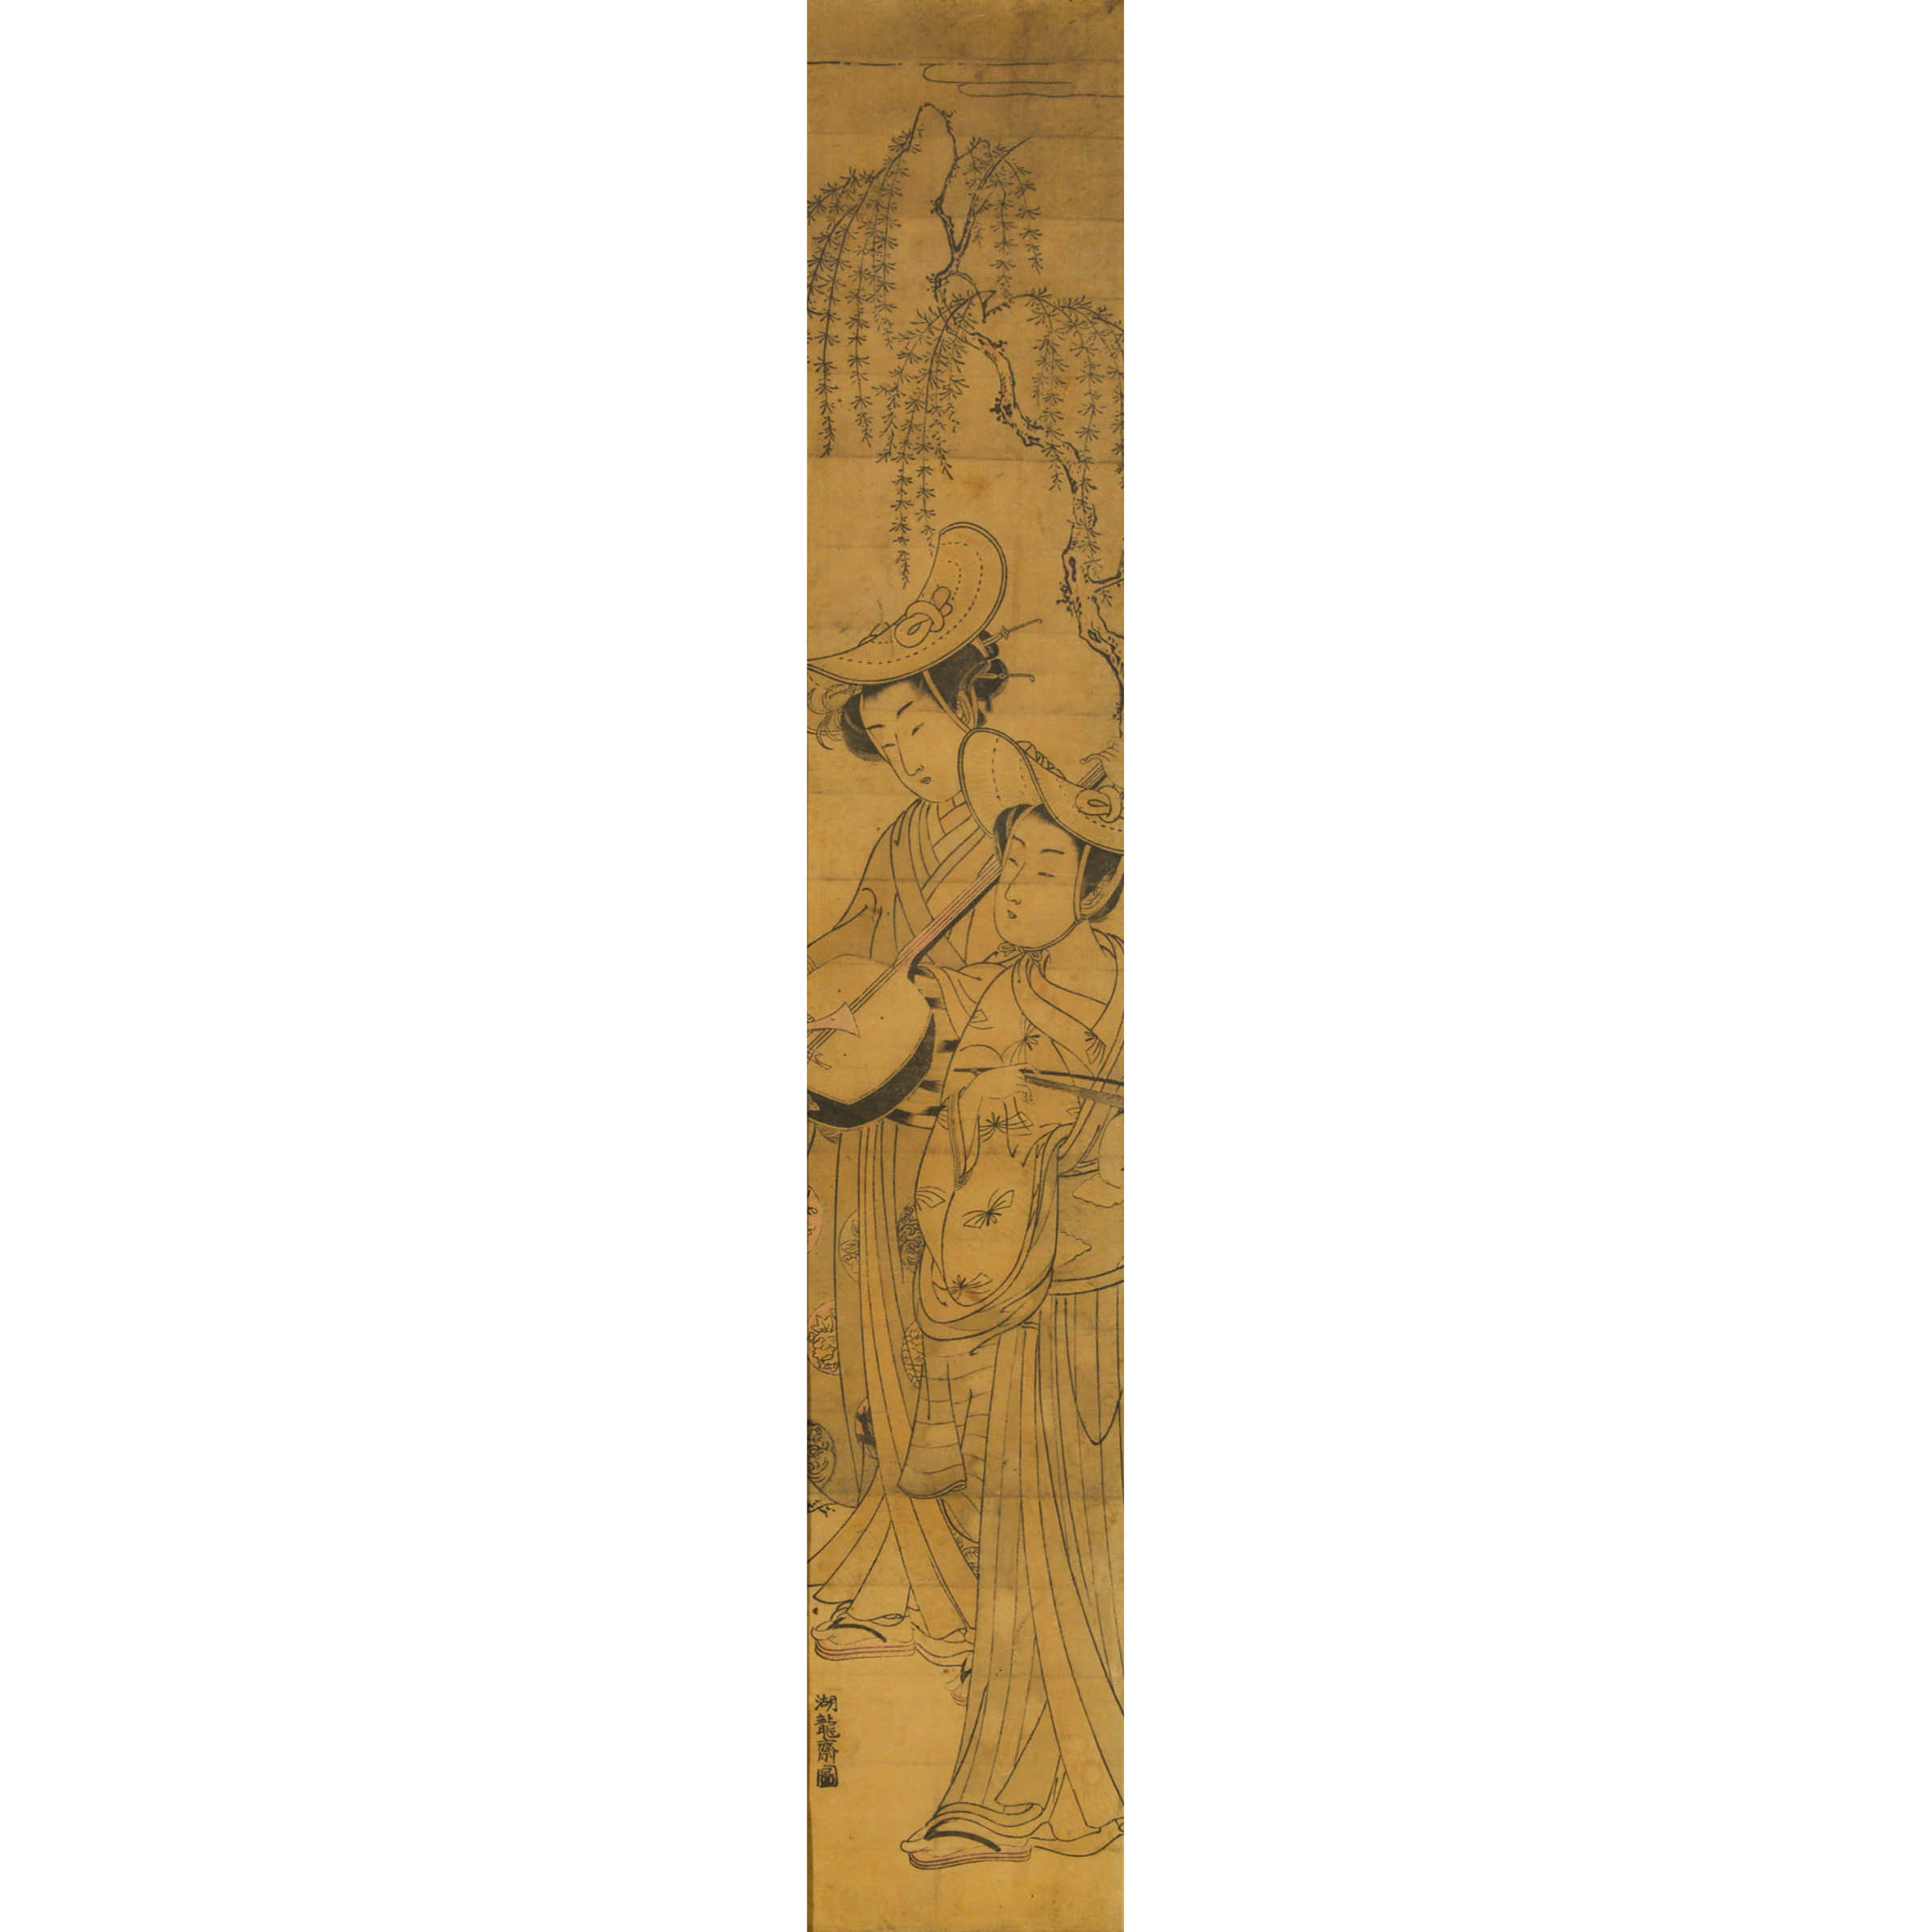 Isoda Koryusai (1735-1790), Two